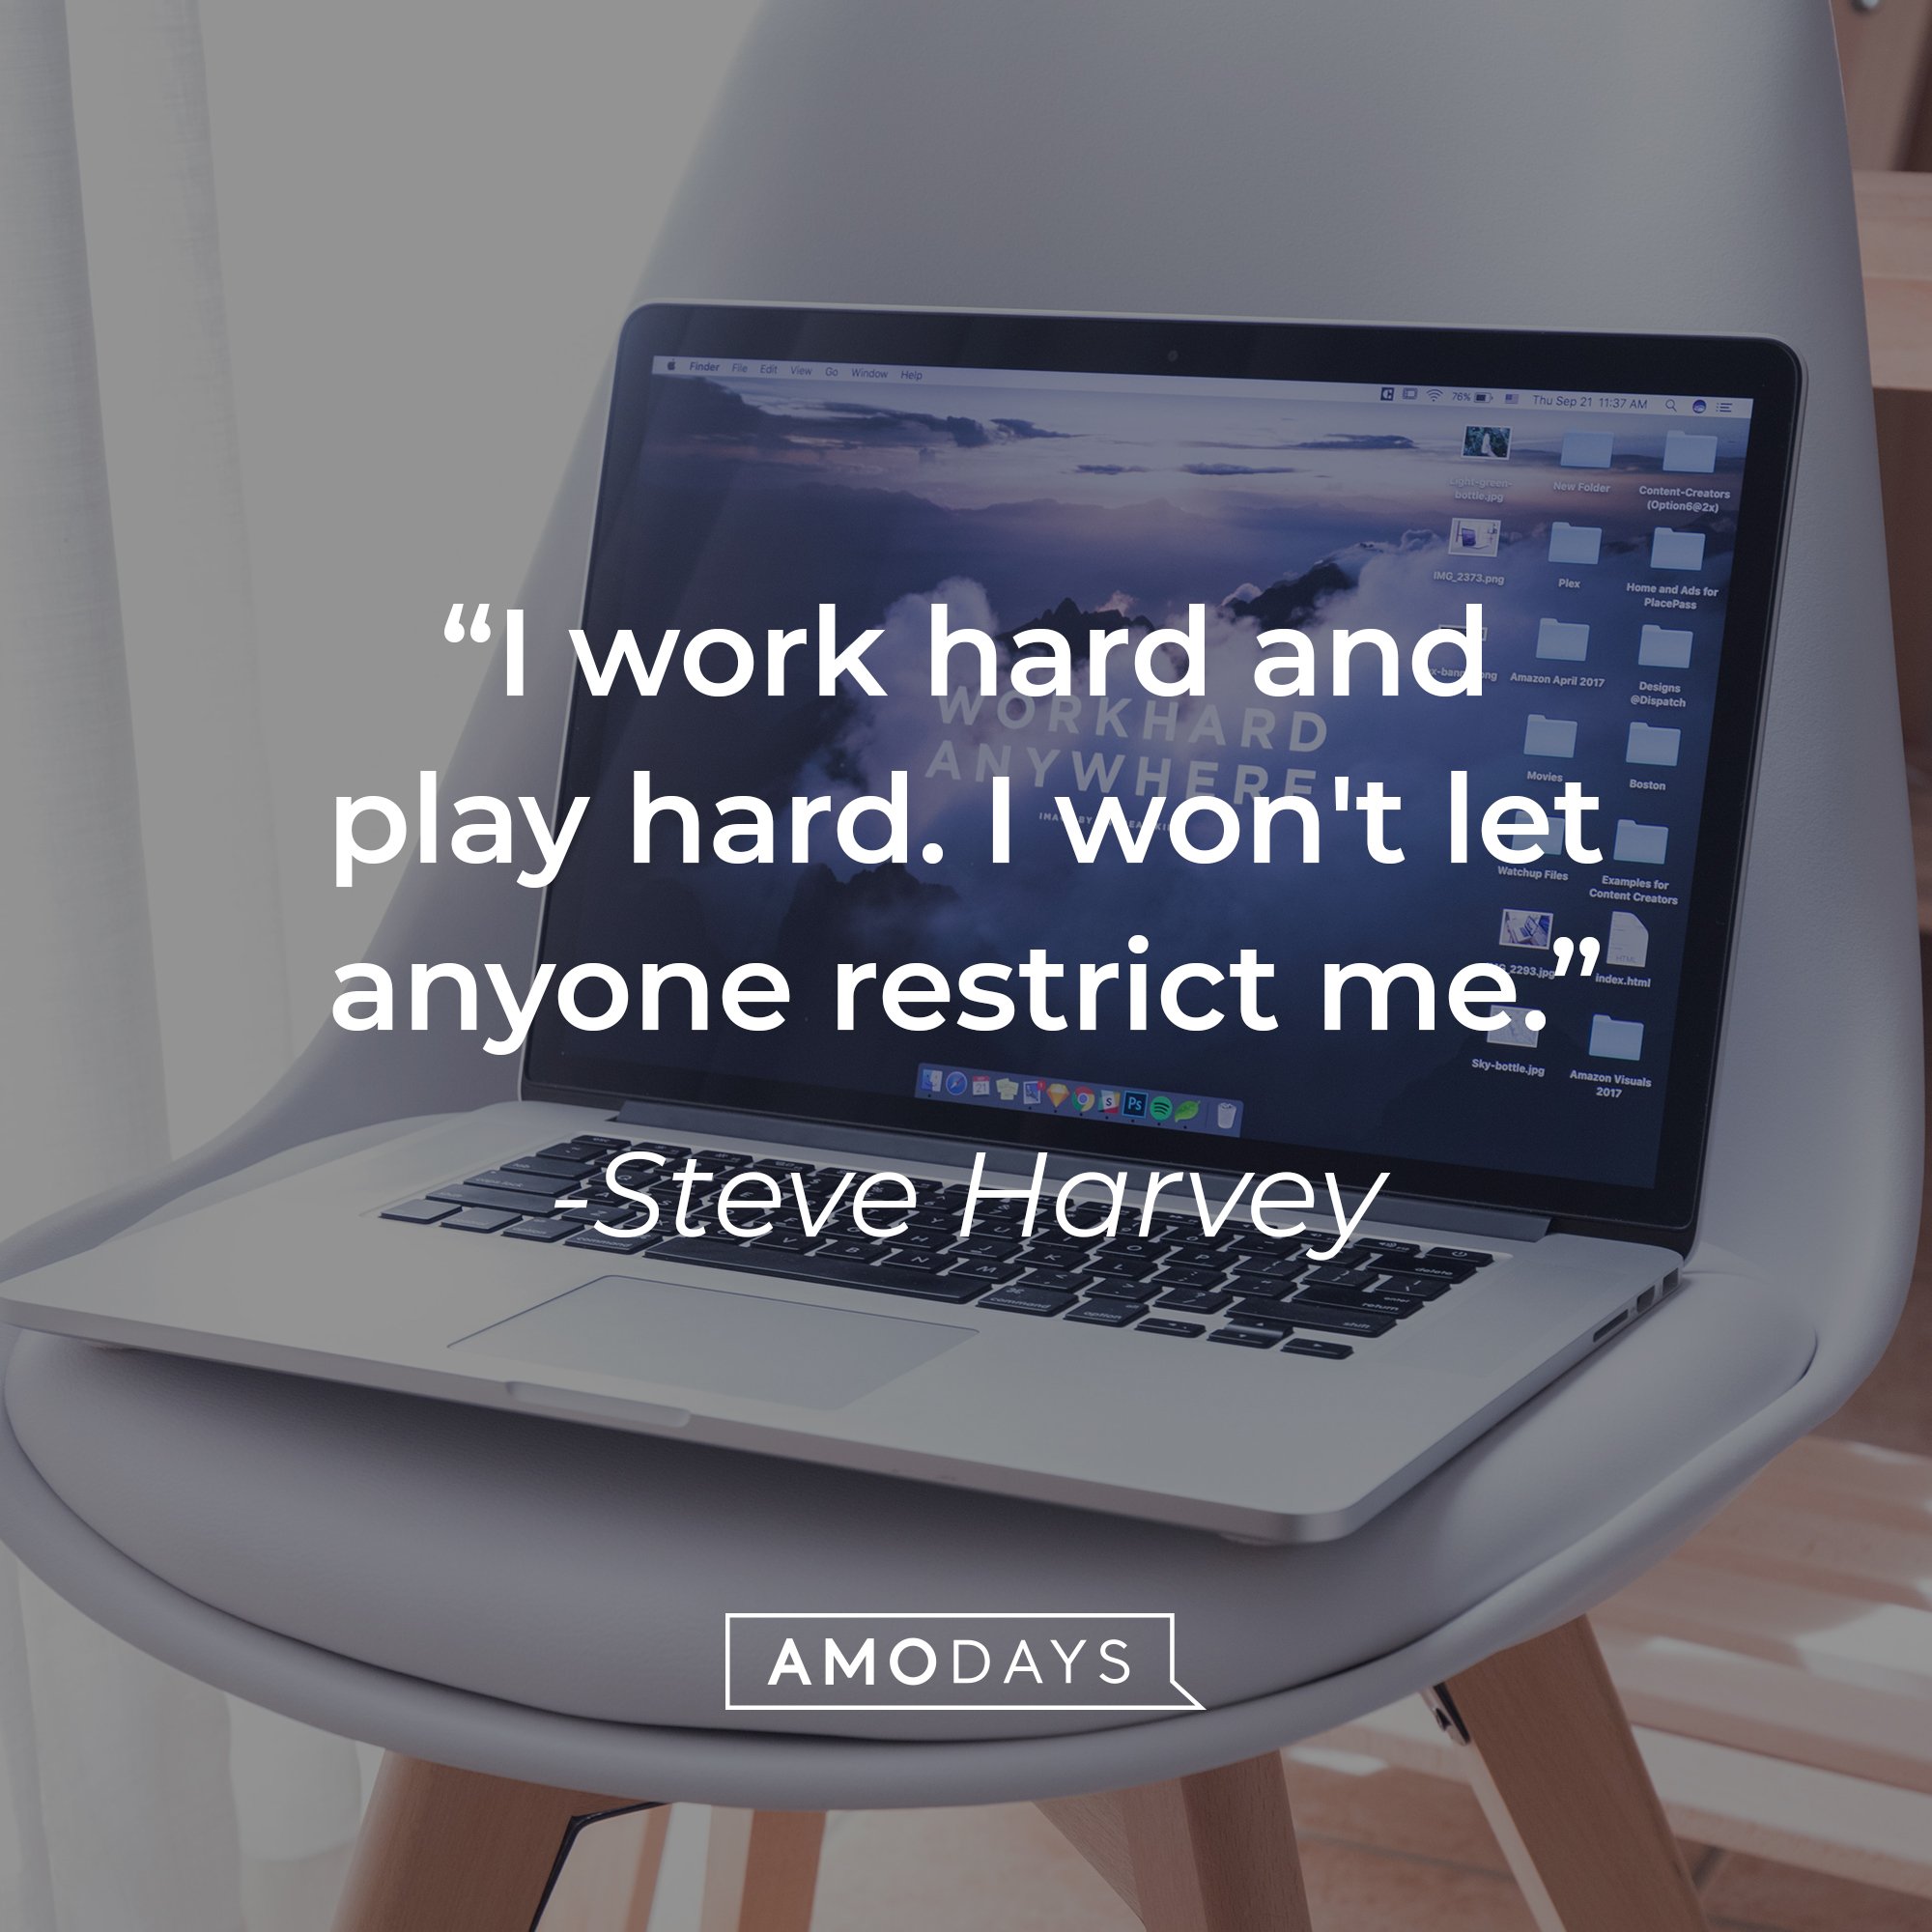 Steve Harvey's quote: "I work hard and play hard. I won't let anyone restrict me." | Image: AmoDays